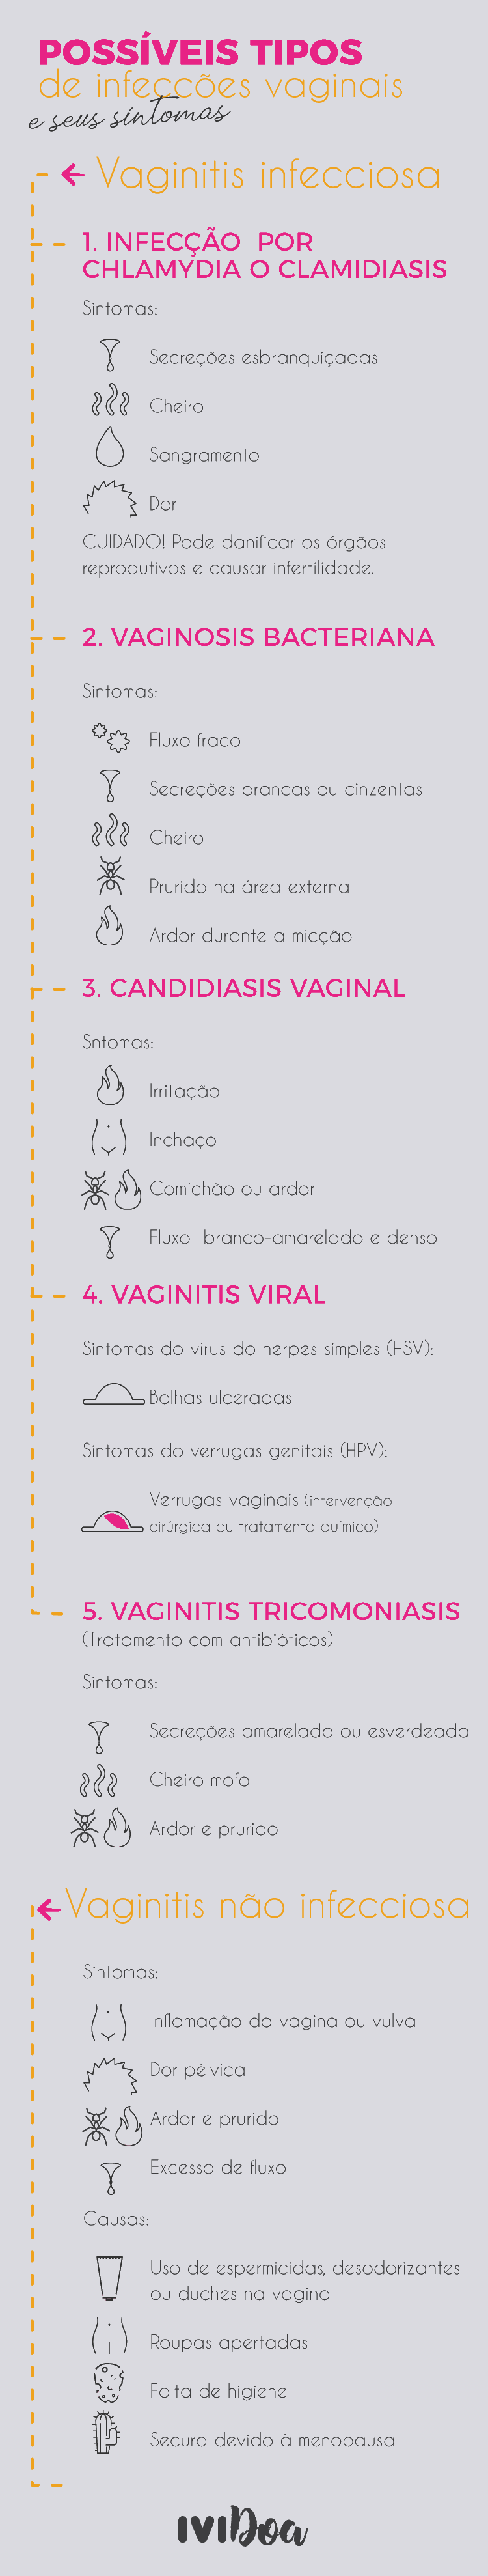 infeccoes vaginais-infografia-n